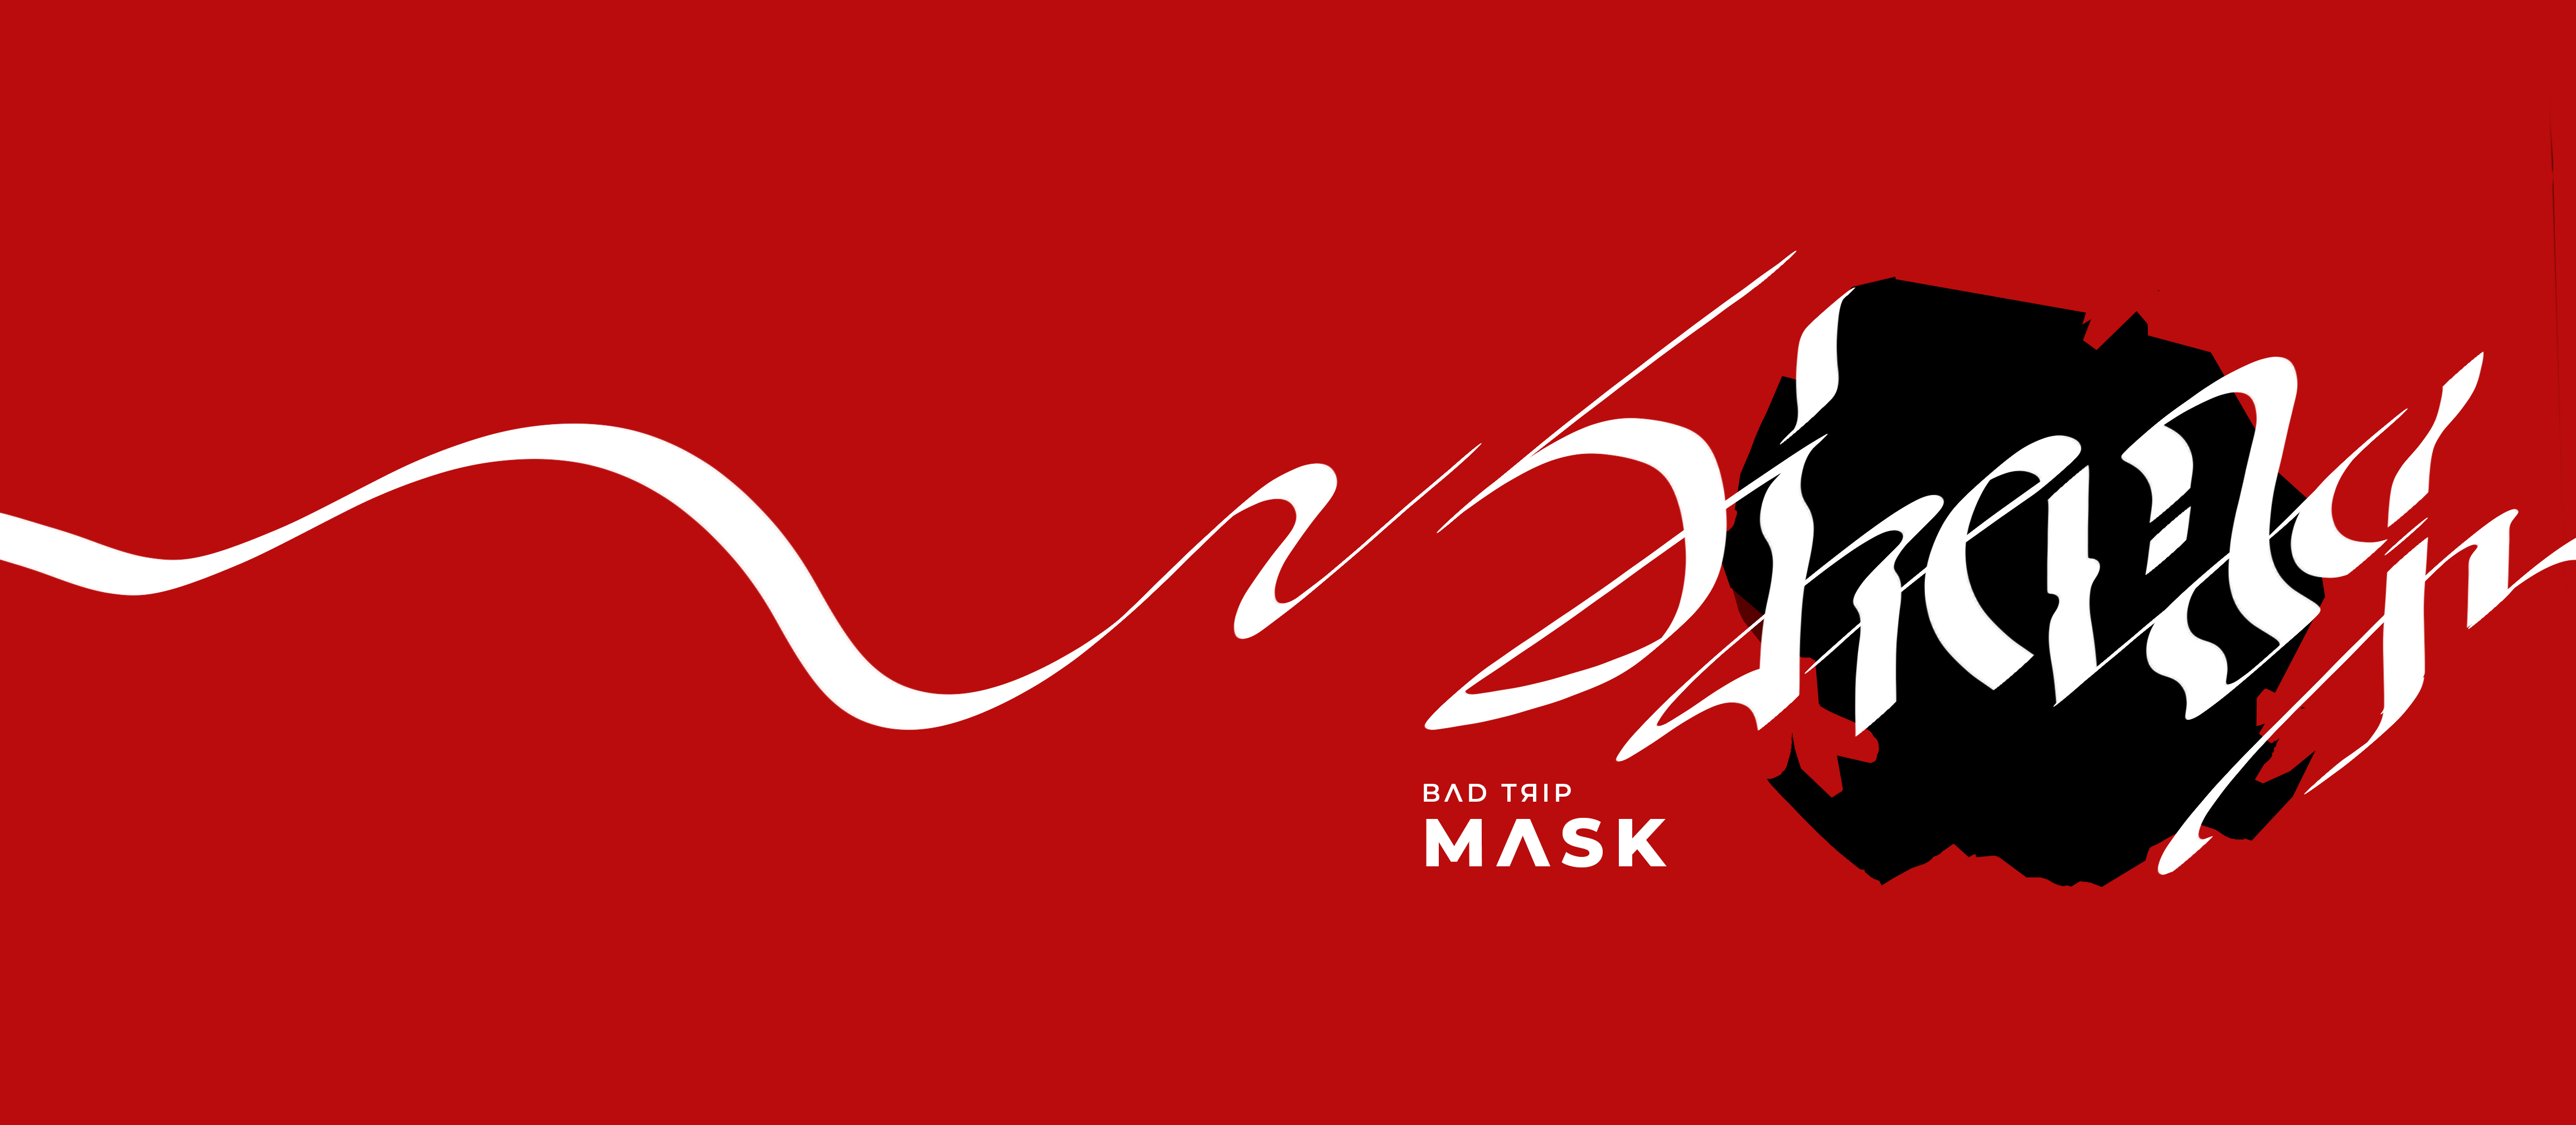 B.T. MASK SHADES banner